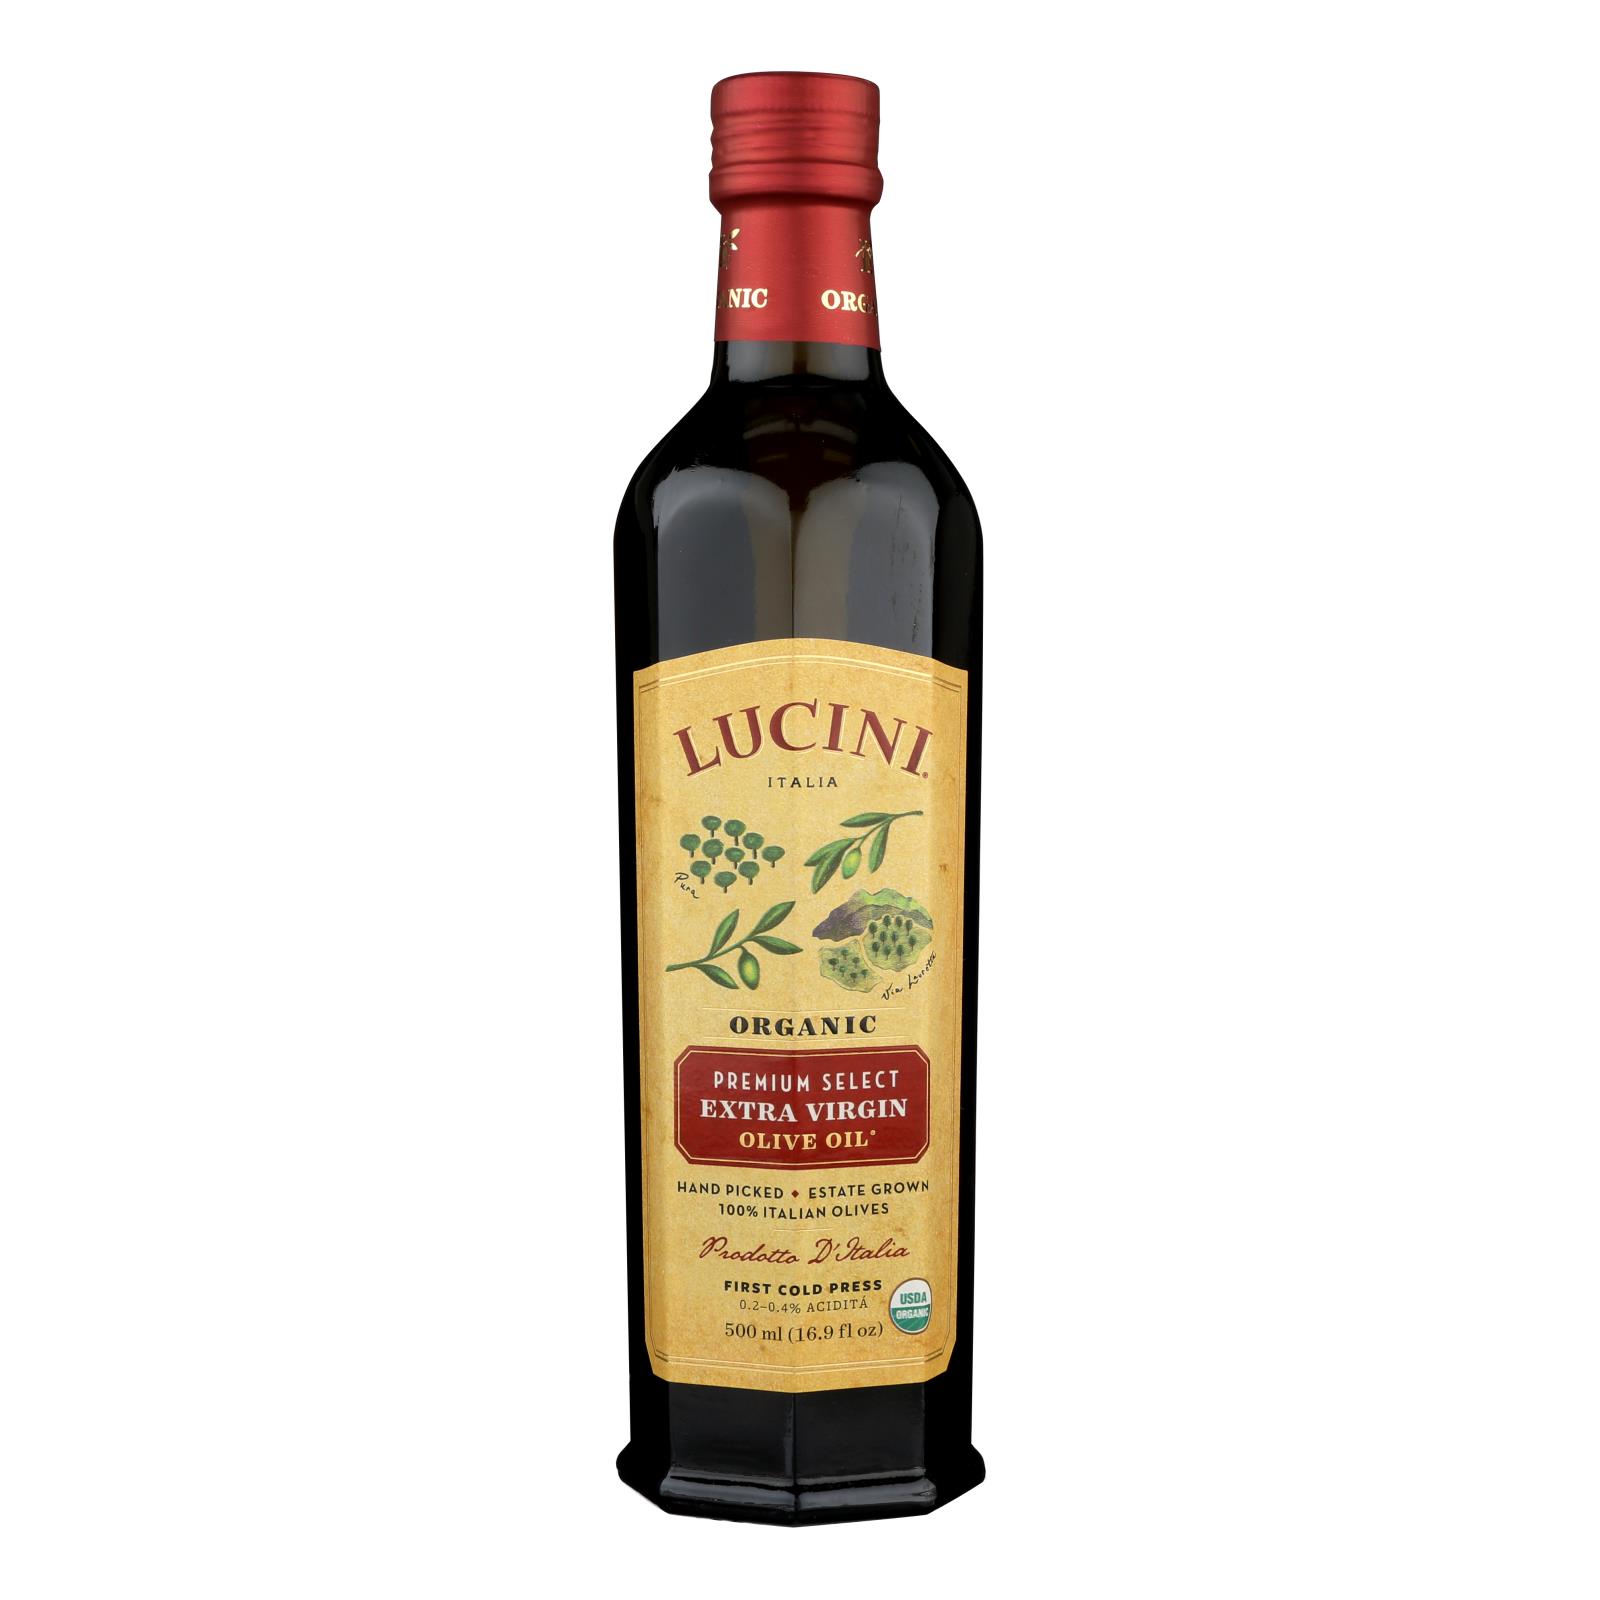 Lucini Italia Olive Oil - Organic - X-Virgin - Large - 6개 묶음상품 - 16.9 fl oz